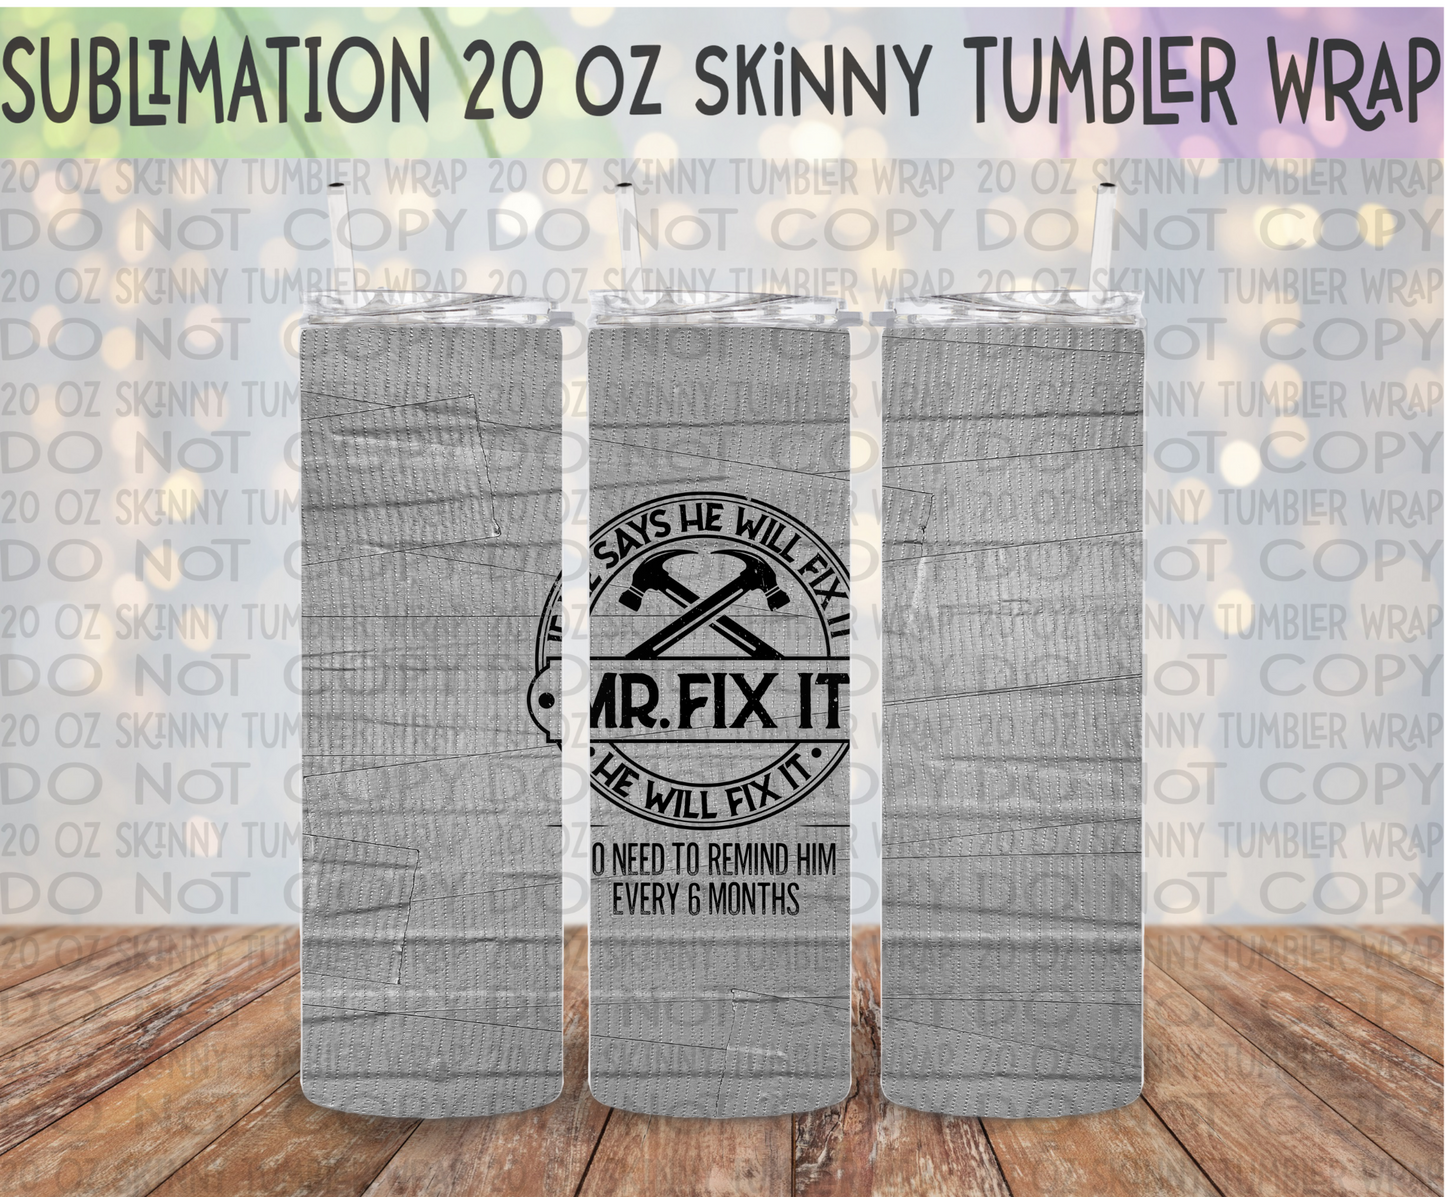 Mr. Fix It (Duct Tape) 20 Oz Skinny Tumbler Wrap - Sublimation Transfer - RTS